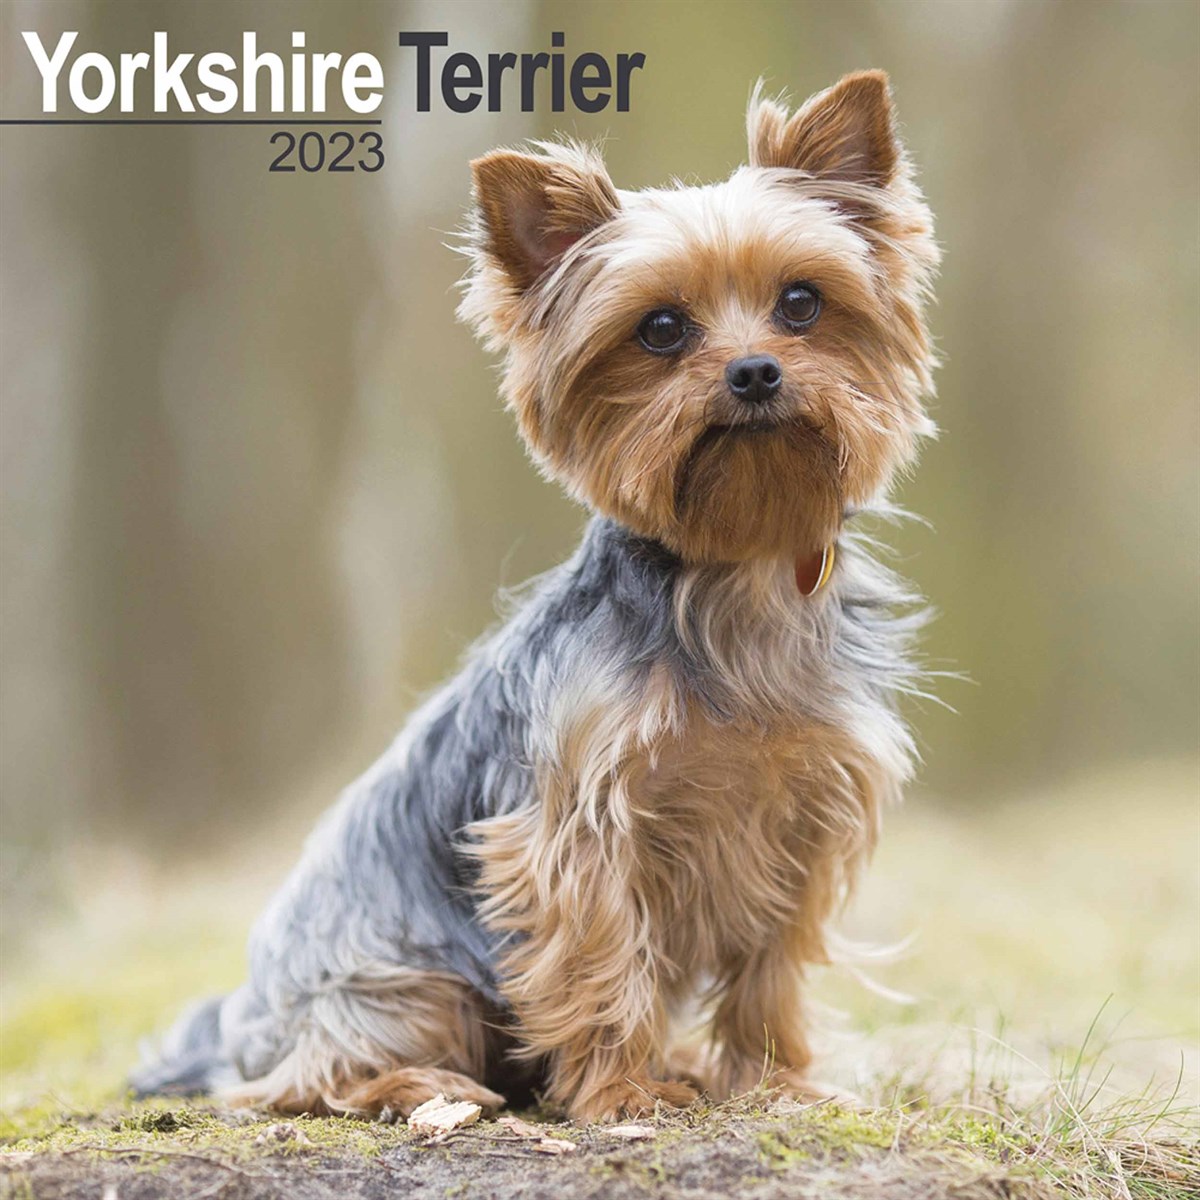 Yorkshire Terrier 2023 Calendars